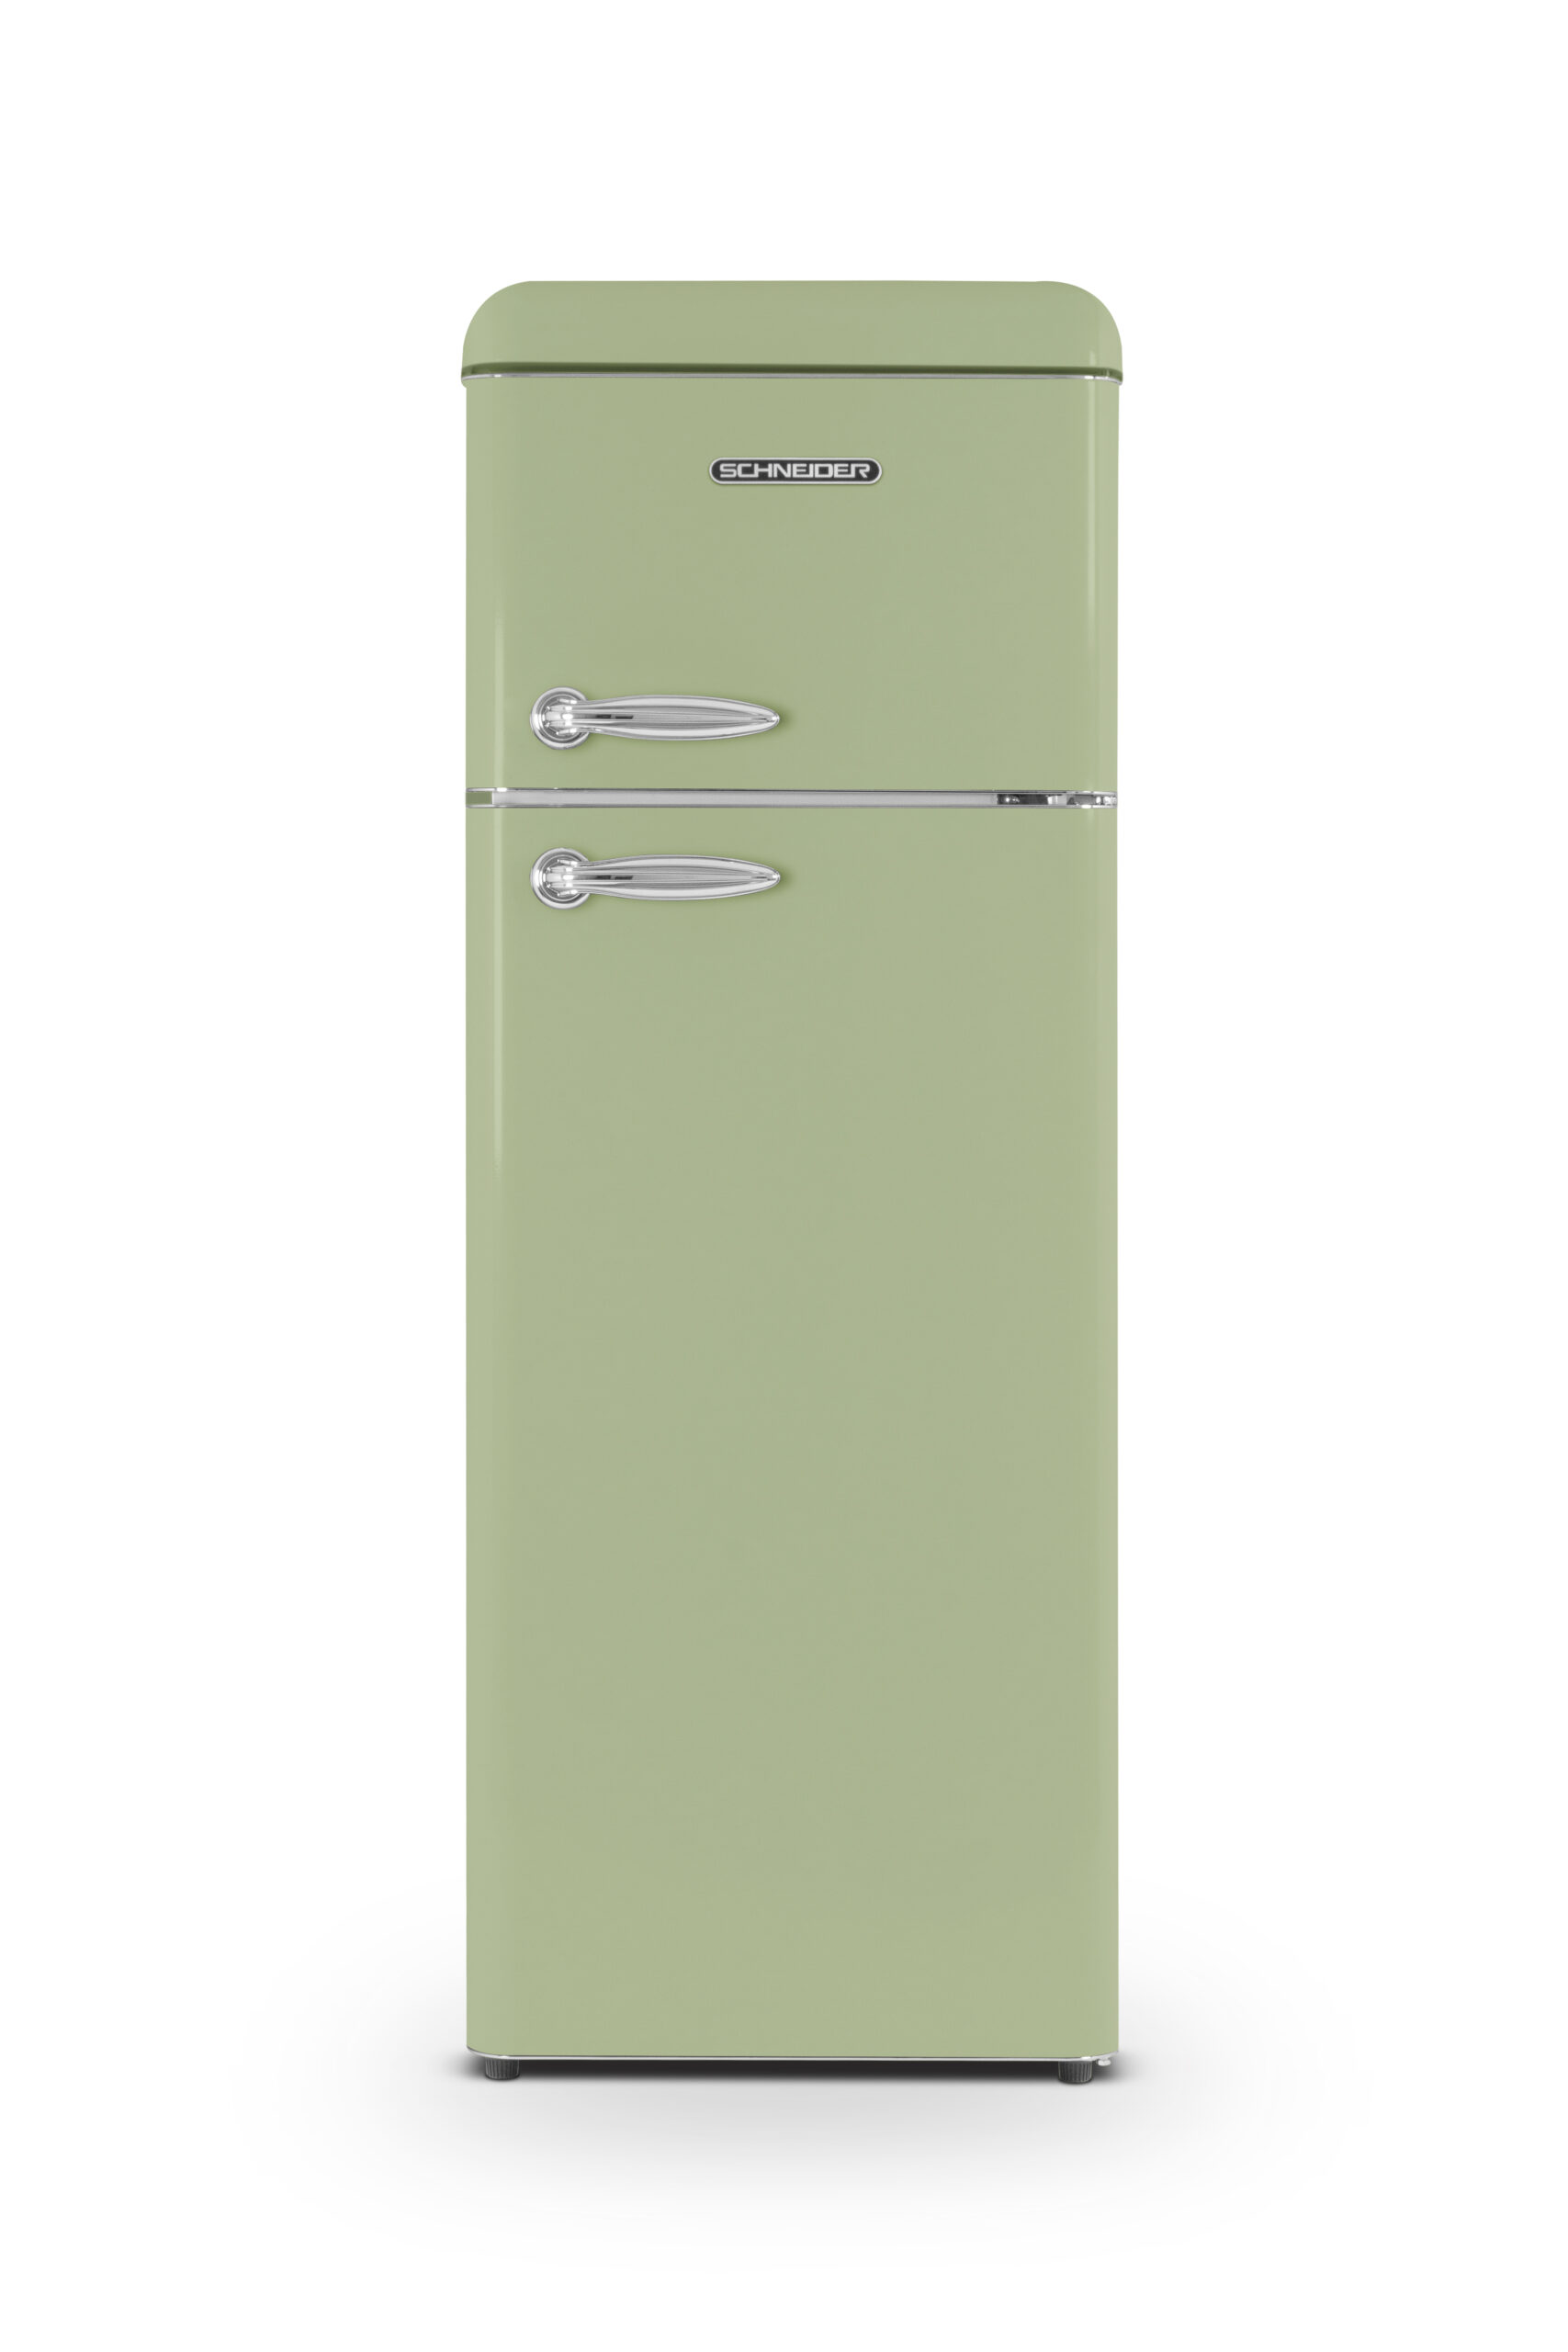 Réfrigérateur vintage vert amande 2 portes 211 L - Schneider - SCDD208VVA